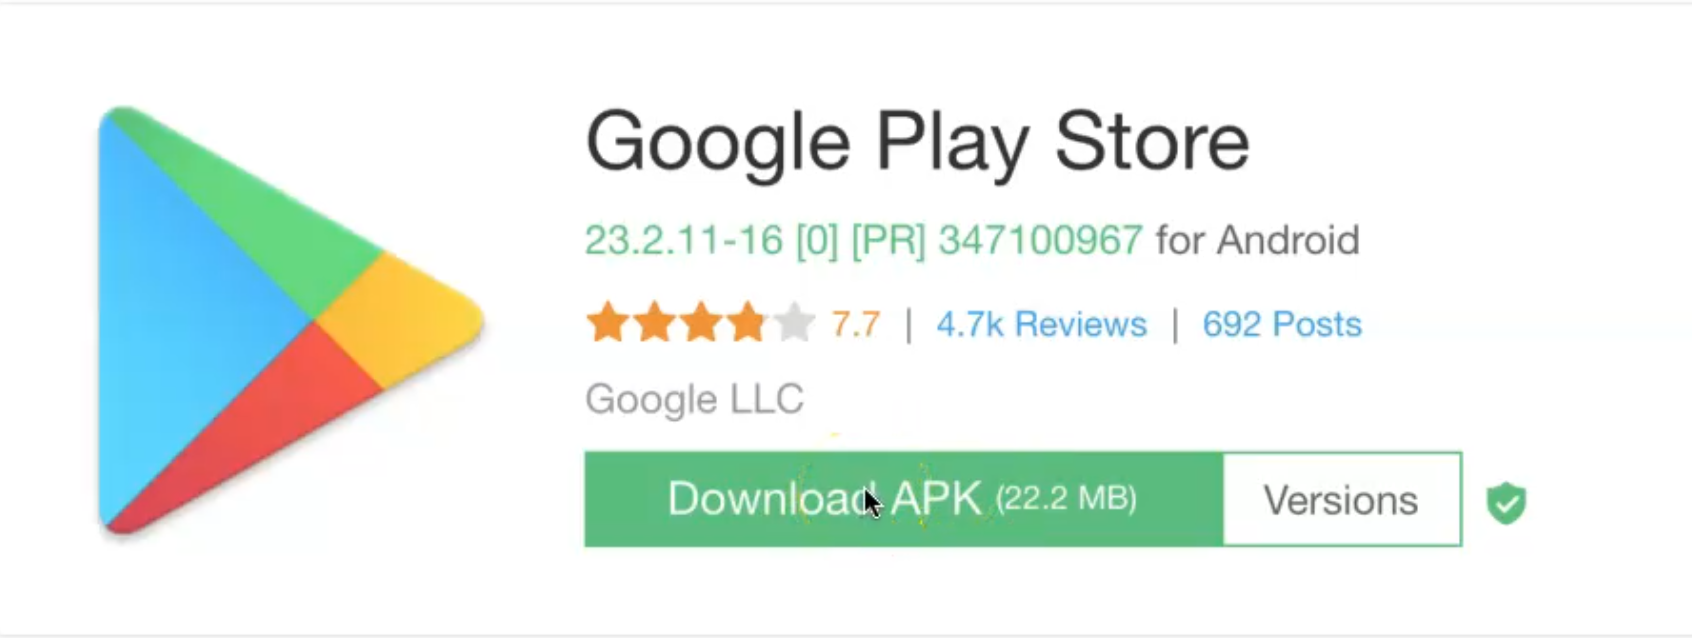 Установить сервисы работы google play. Google Play. Google Play Store. Google Play Маркет. Android Play Store.